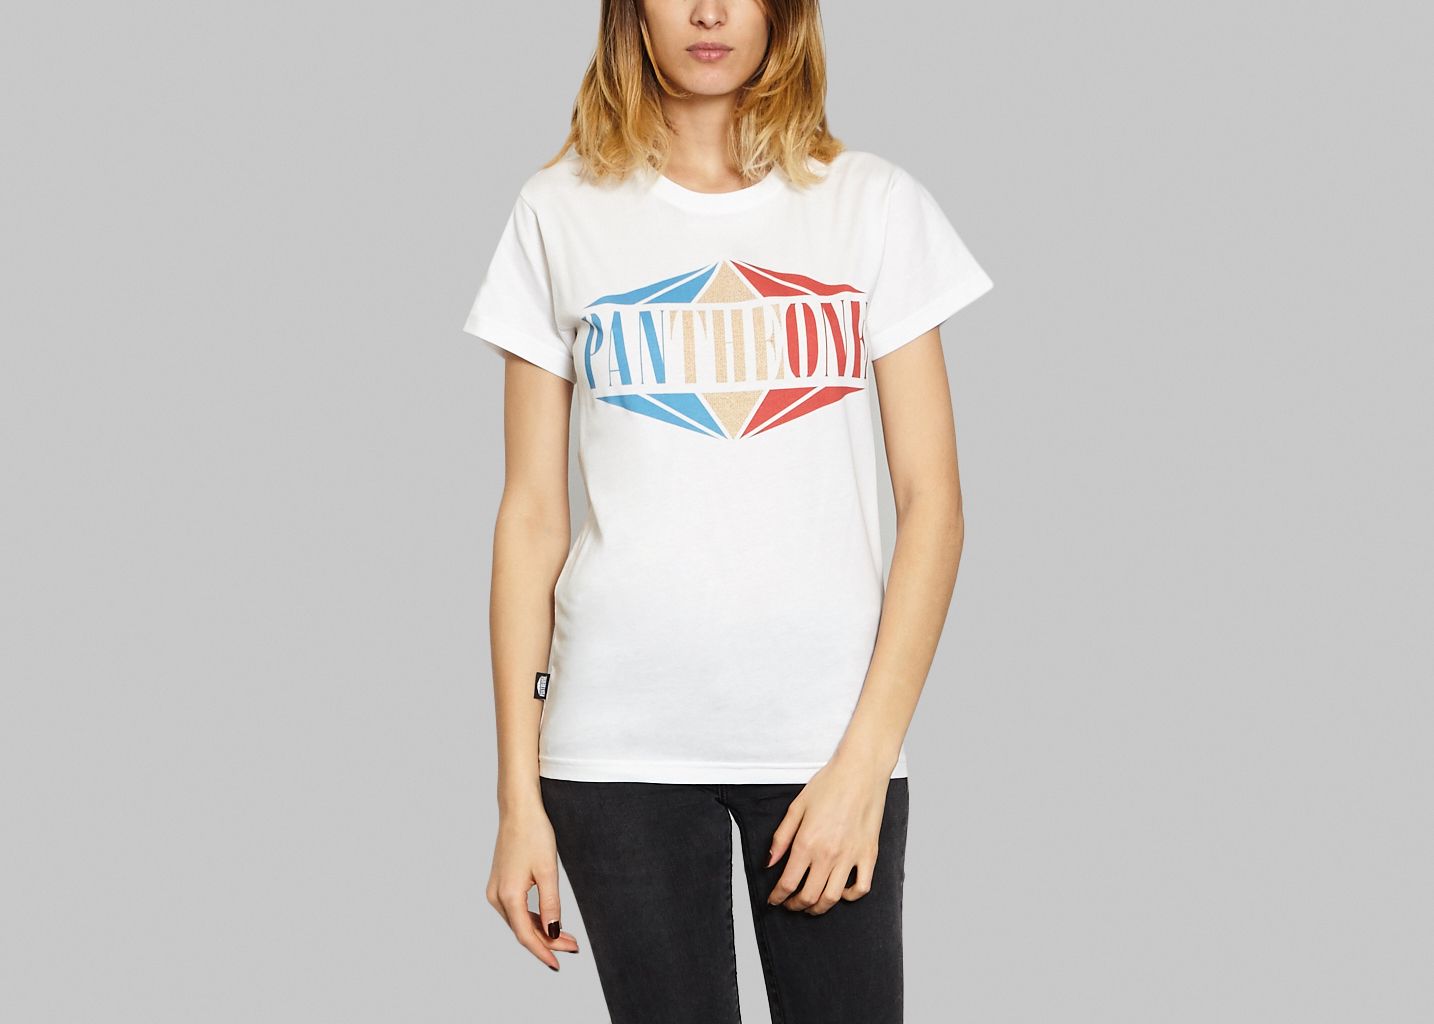 Martin T-shirt - Pantheone